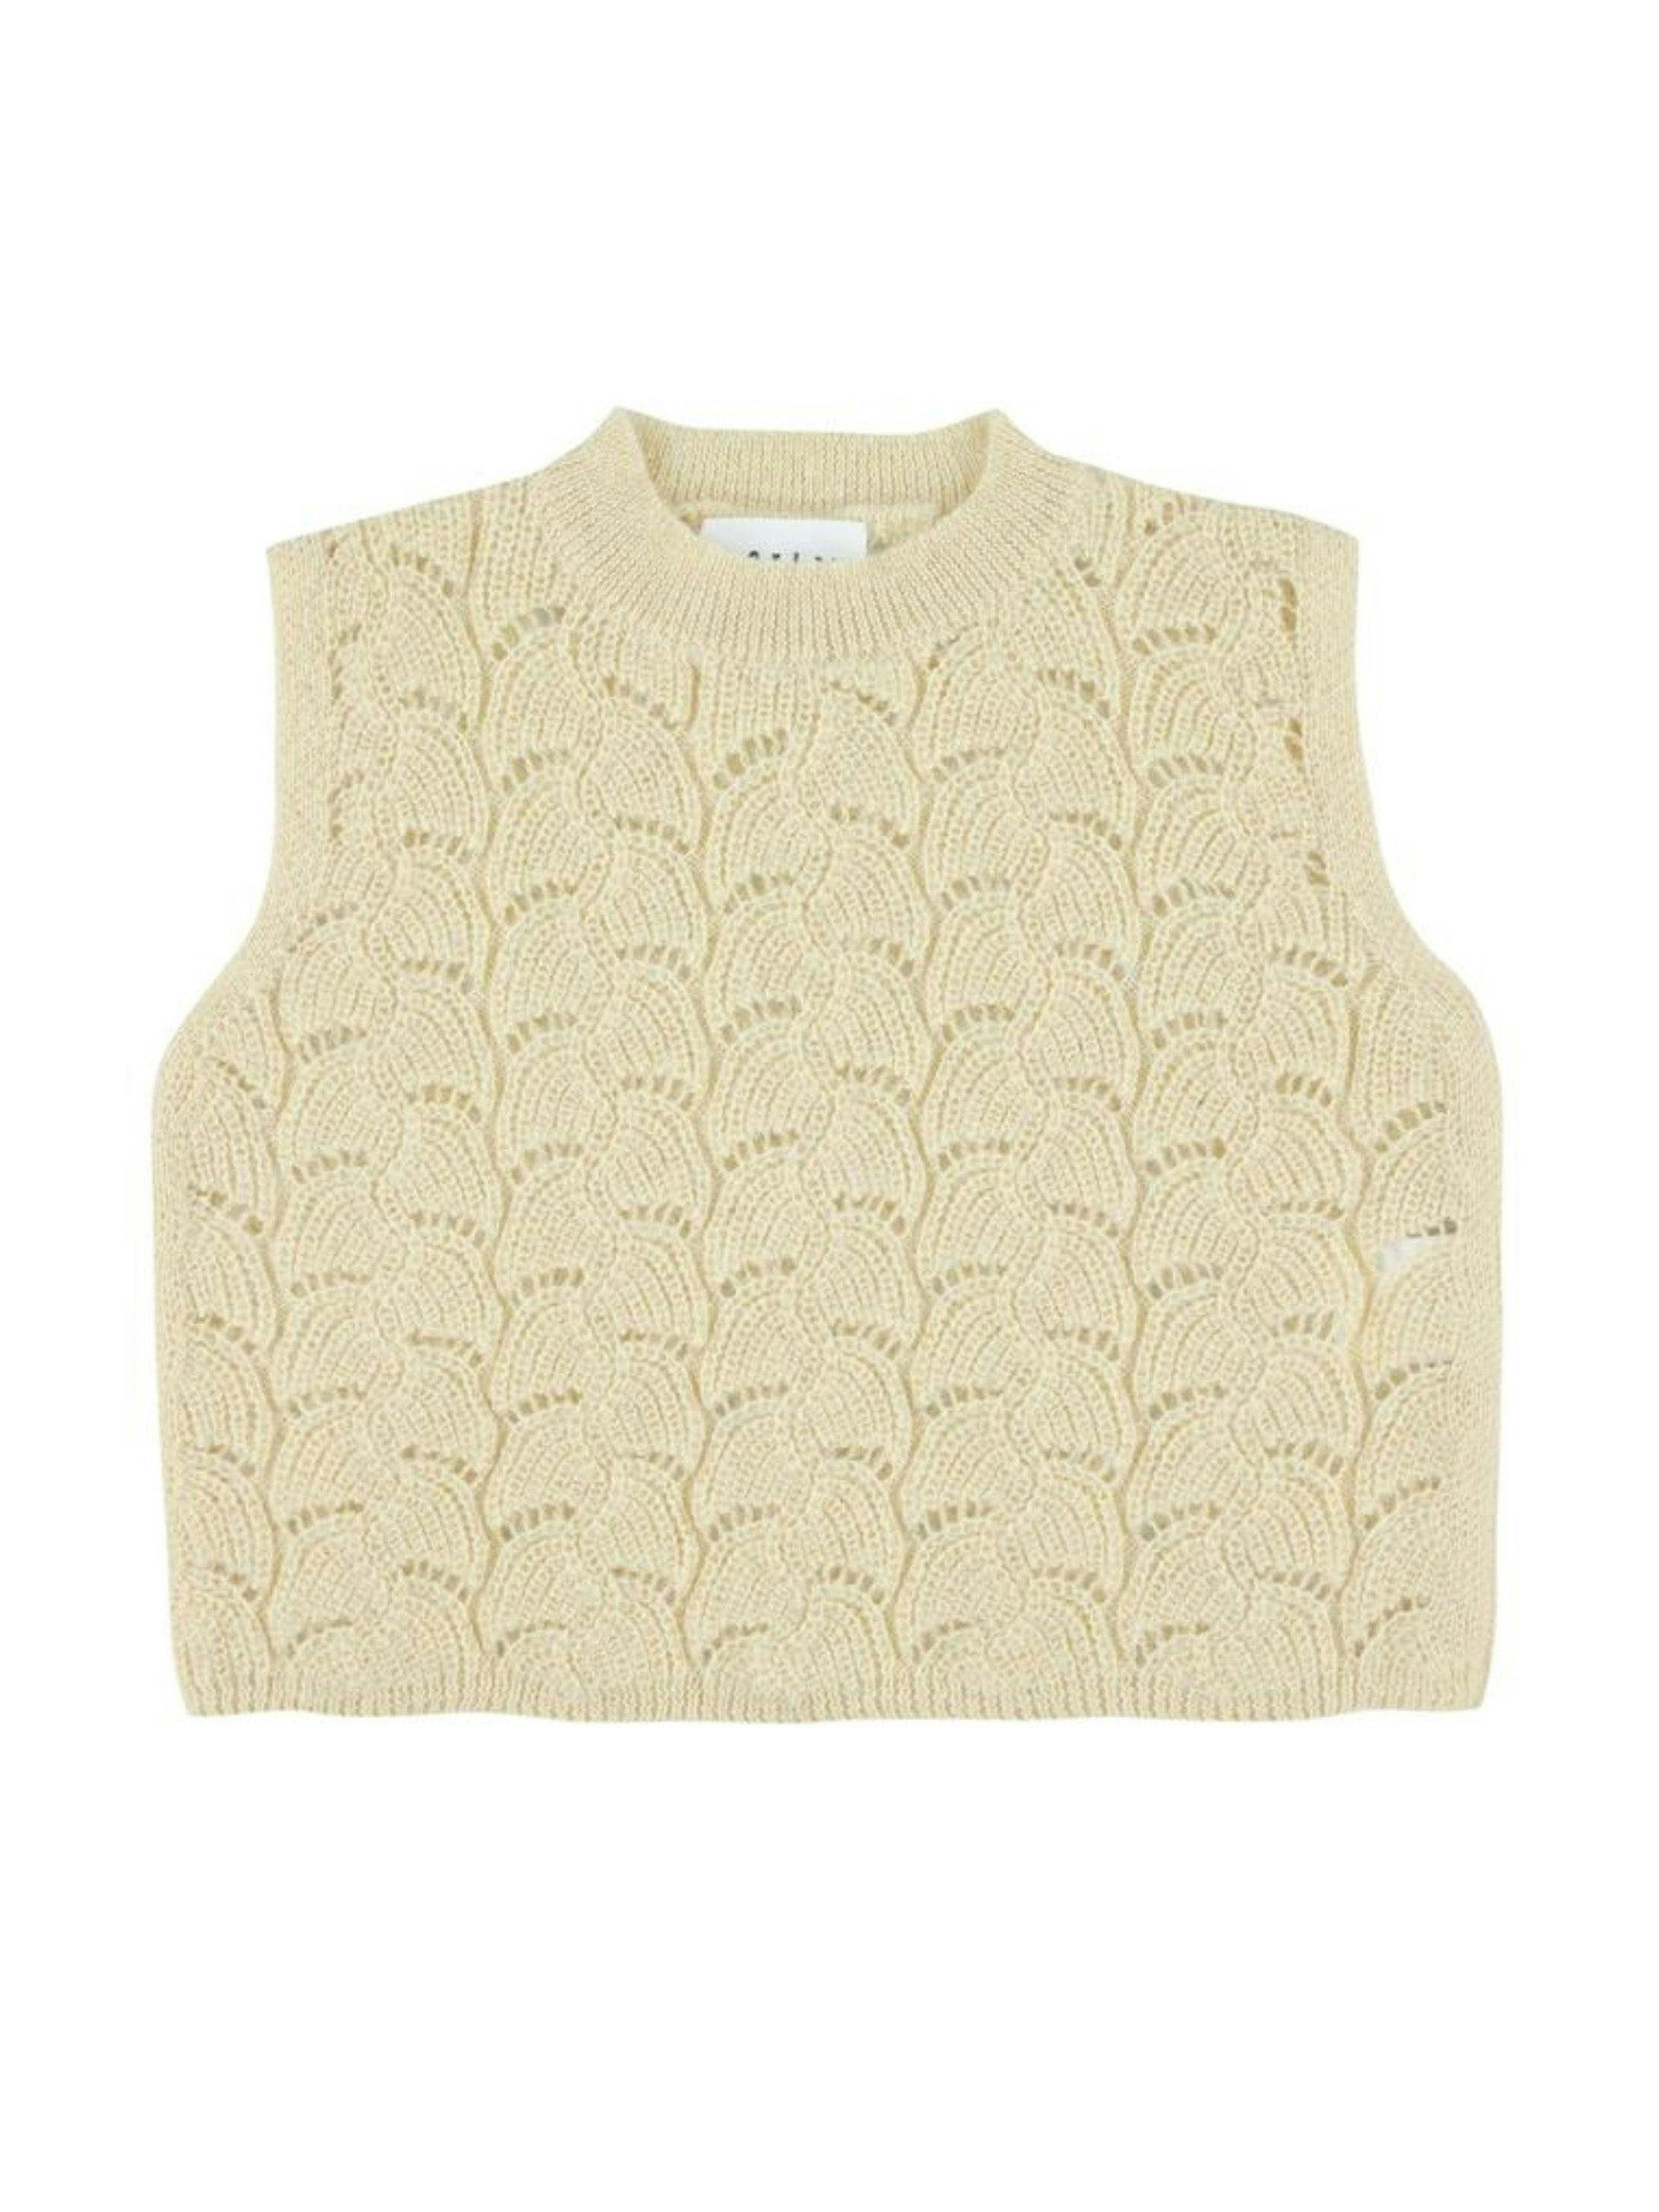 Cream sleeveless knit top